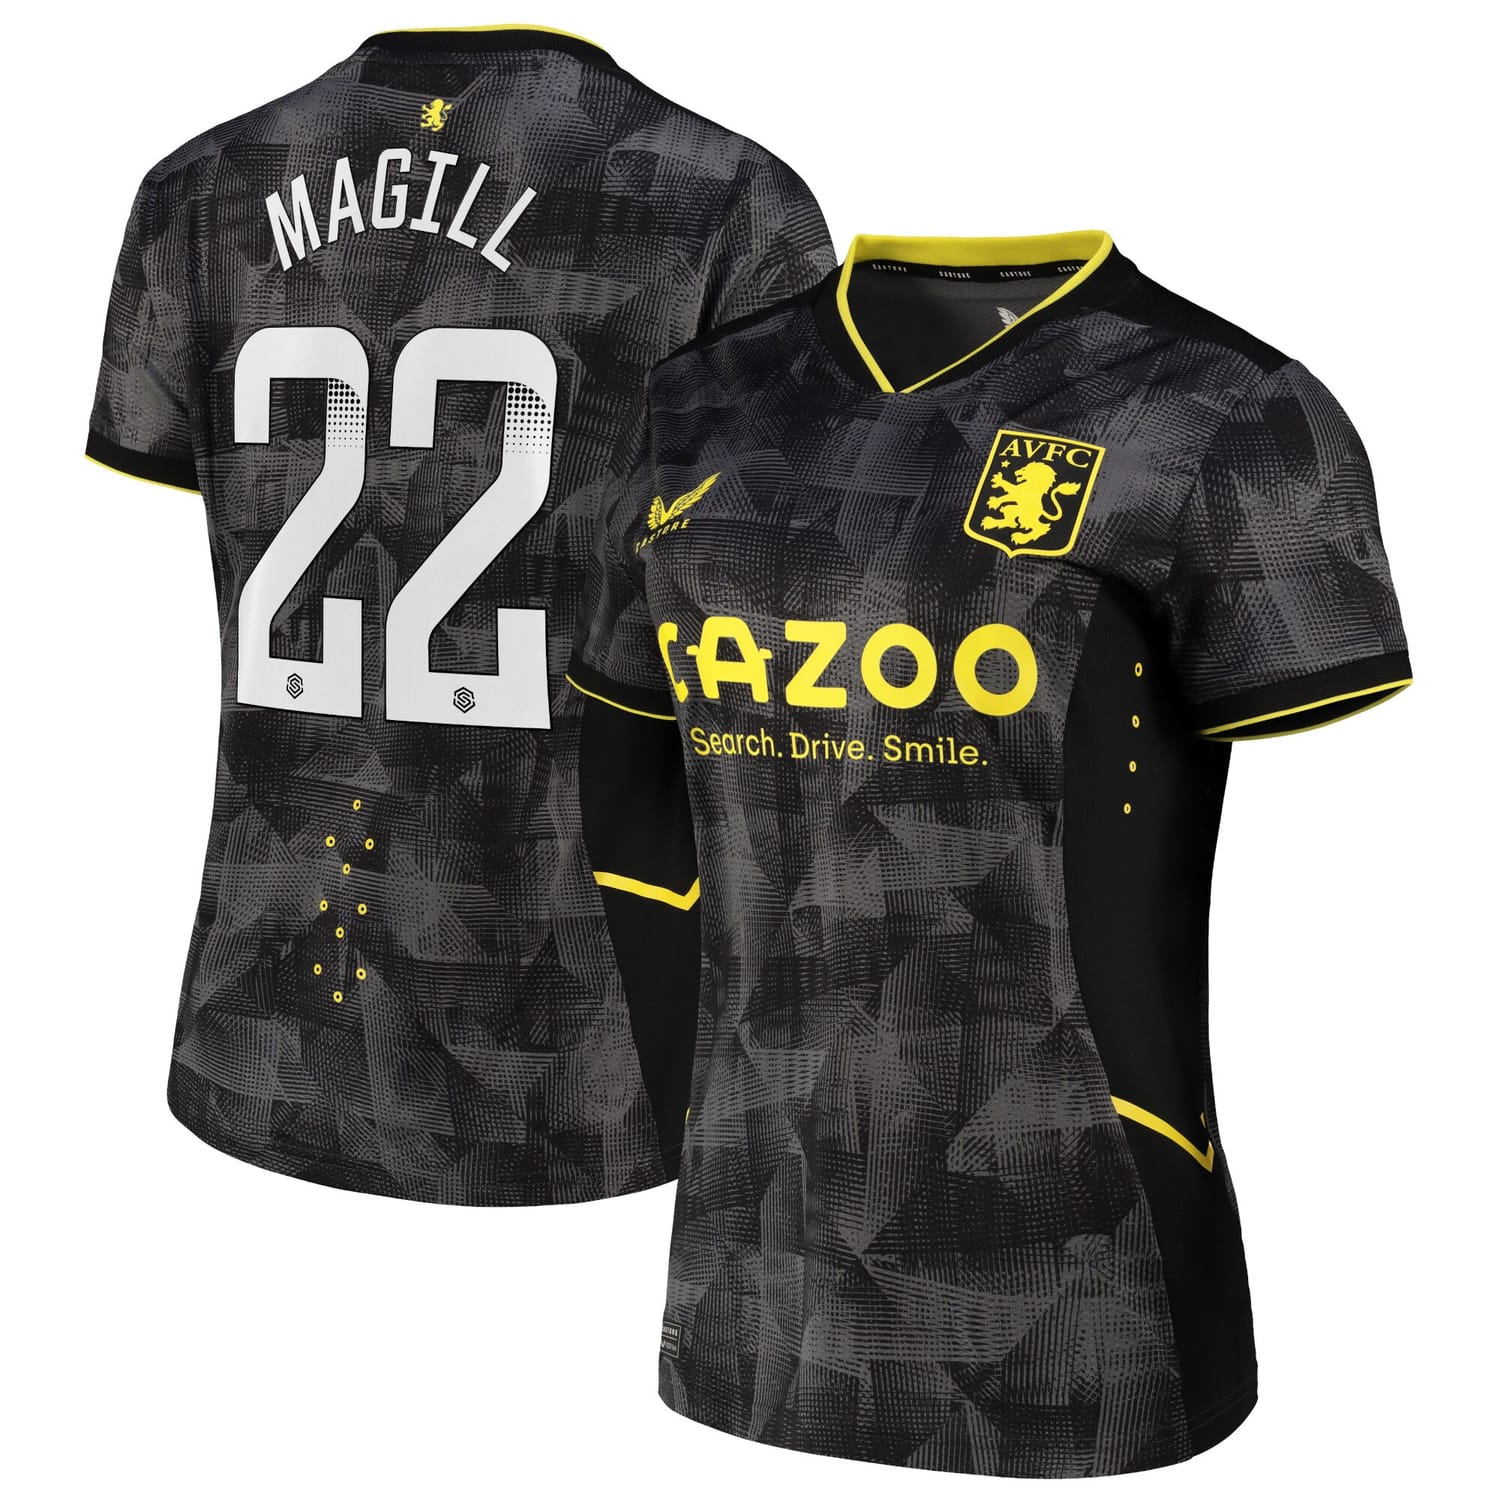 Premier League Aston Villa Third WSL Pro Jersey Shirt 2022-23 player Simone Magill 22 printing for Women